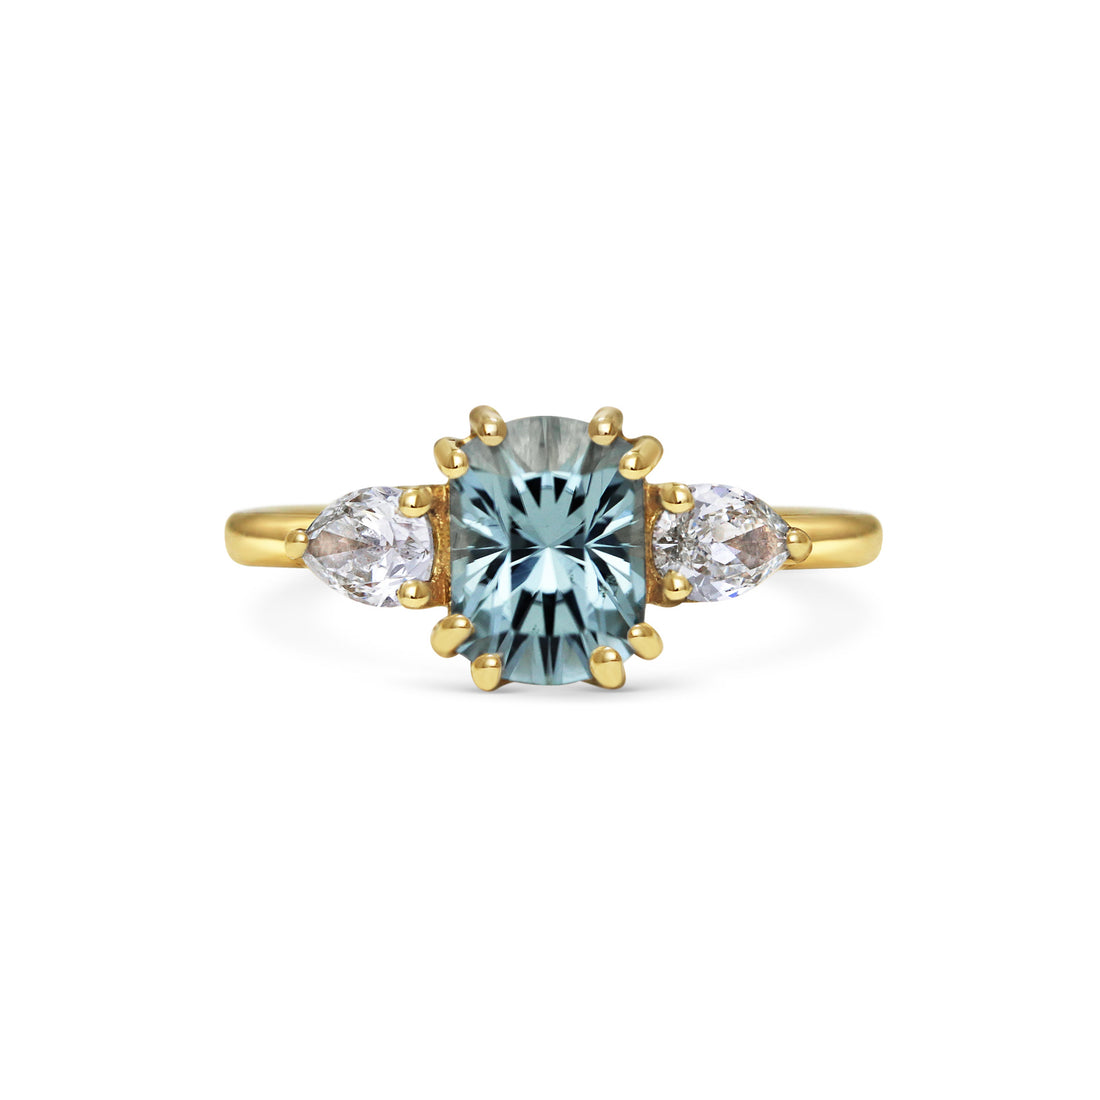  Aqua Tourmaline & Diamond Ring by Michelle Oh | The Cut London